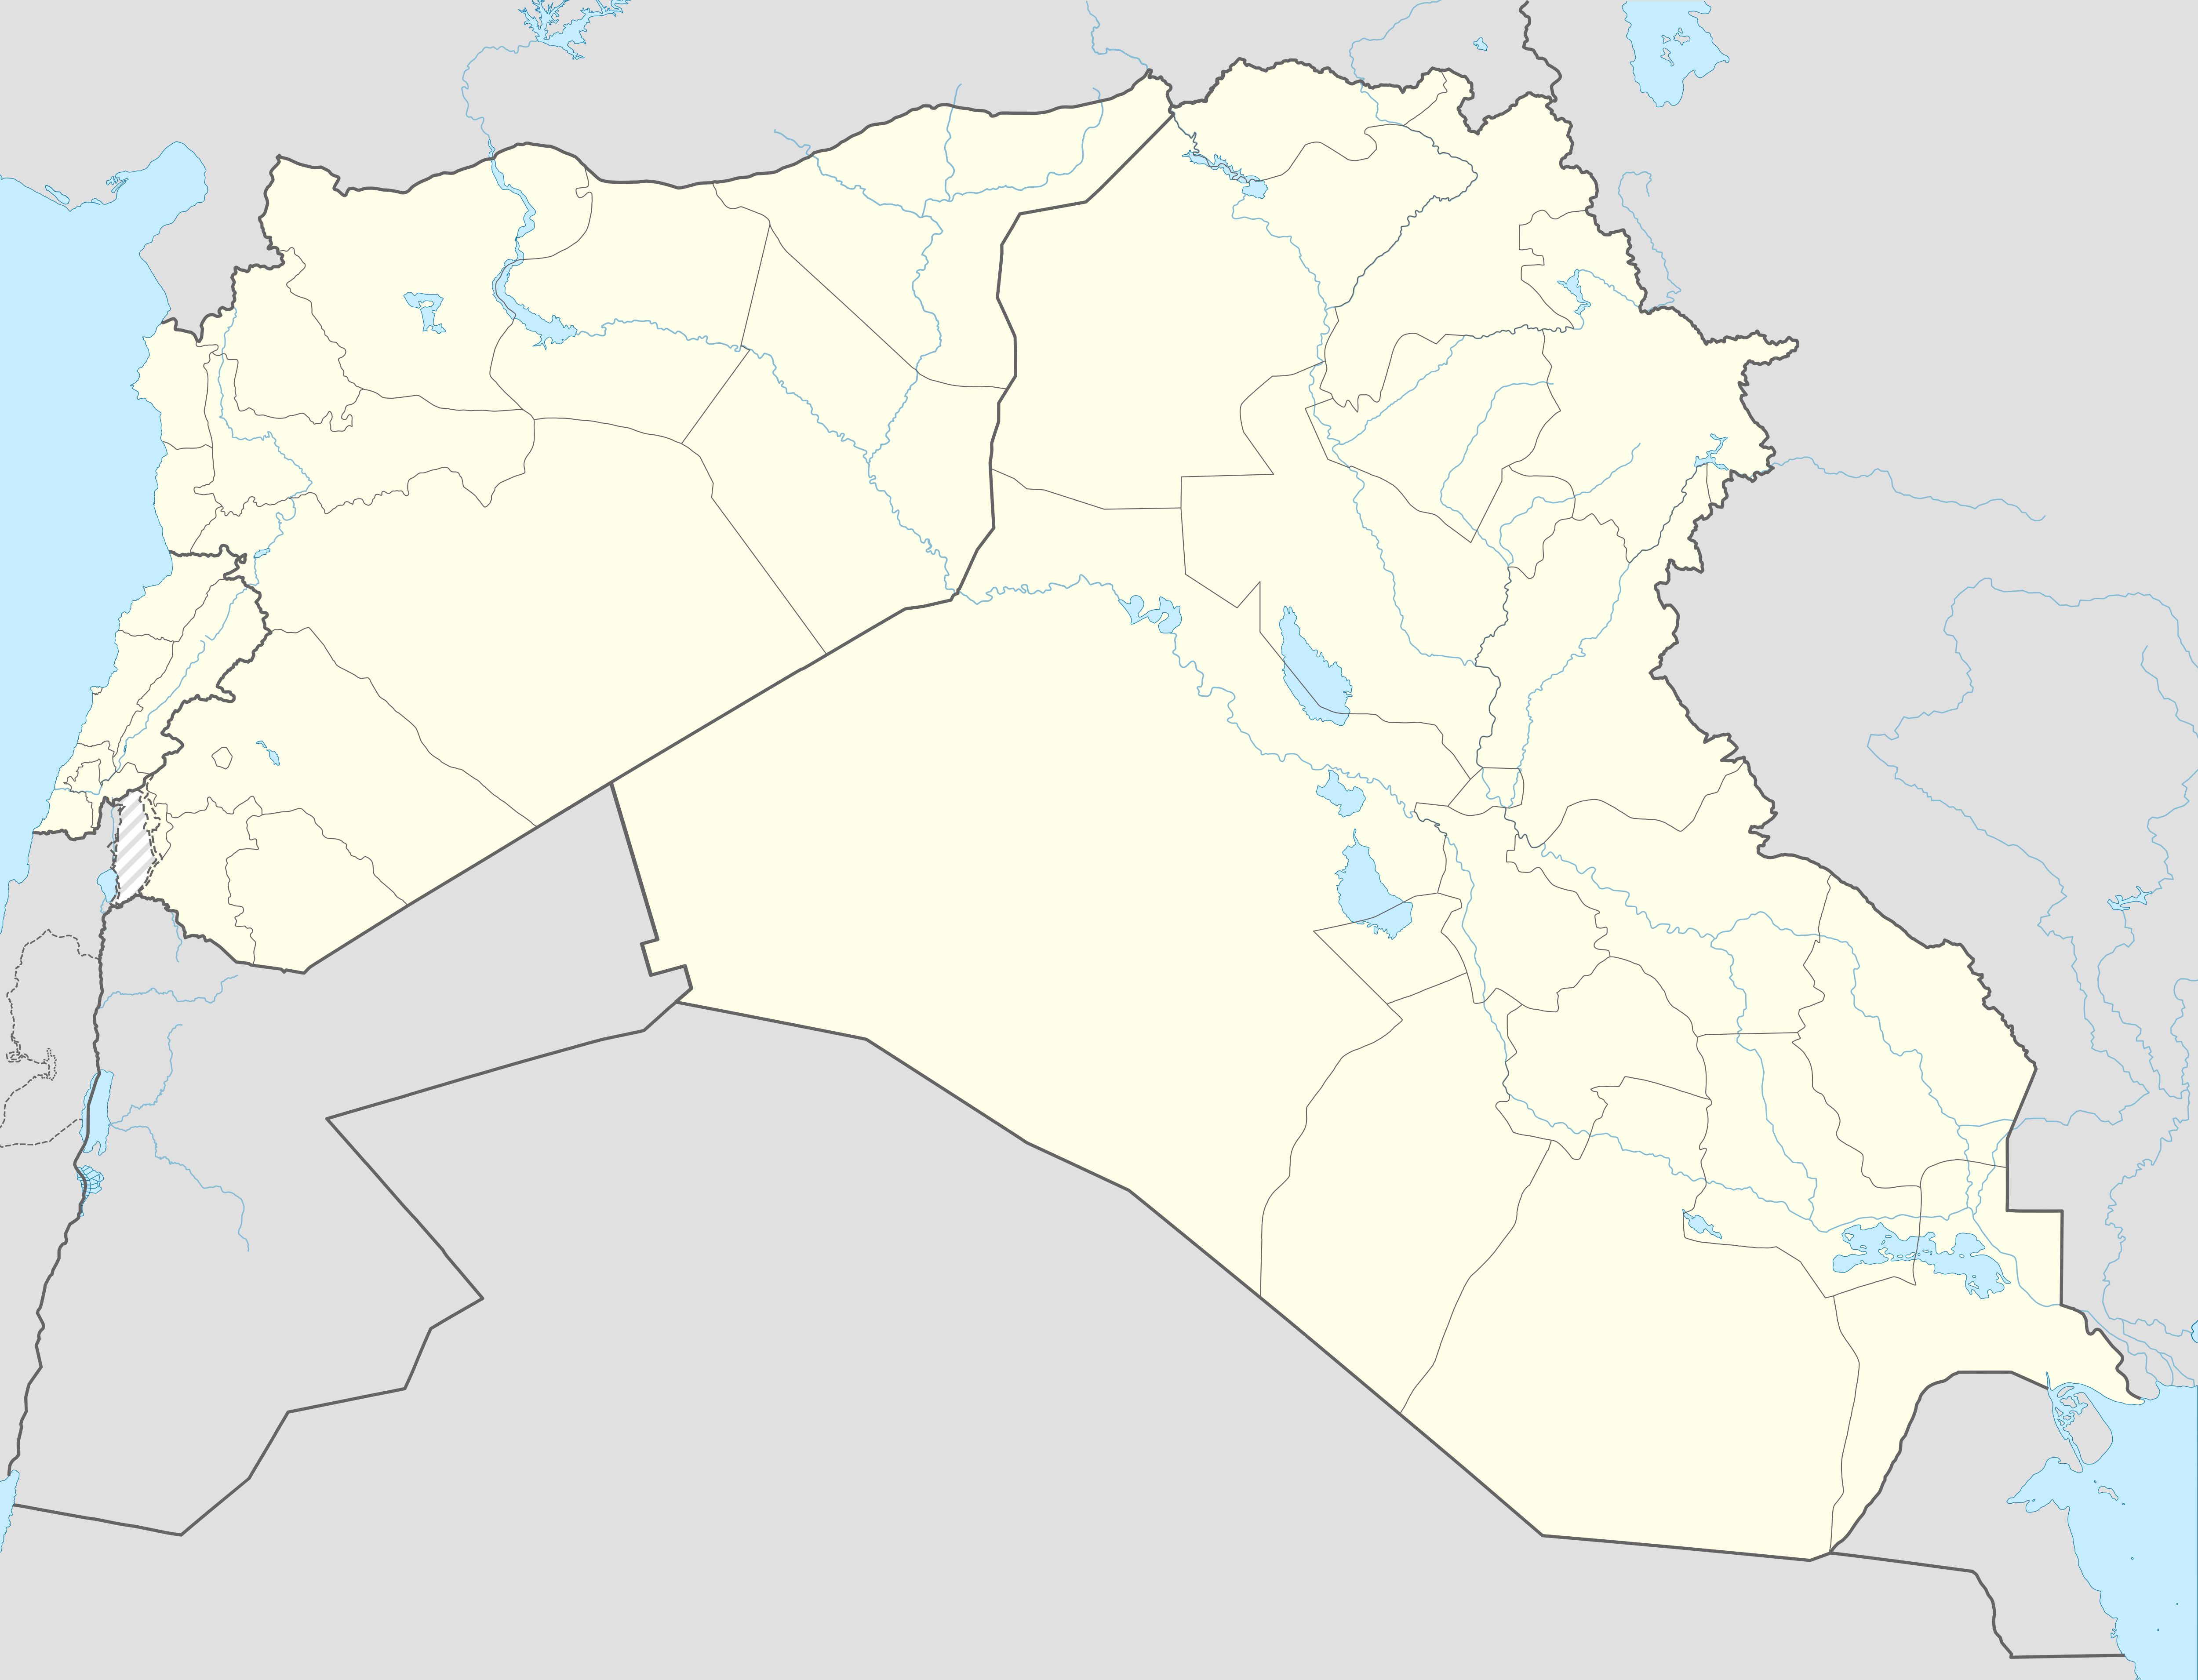 Edisonabcd/sandbox/Syrian, Iraqi, and Lebanese insurgencies detailed map is located in Syria-Iraq-Lebanon